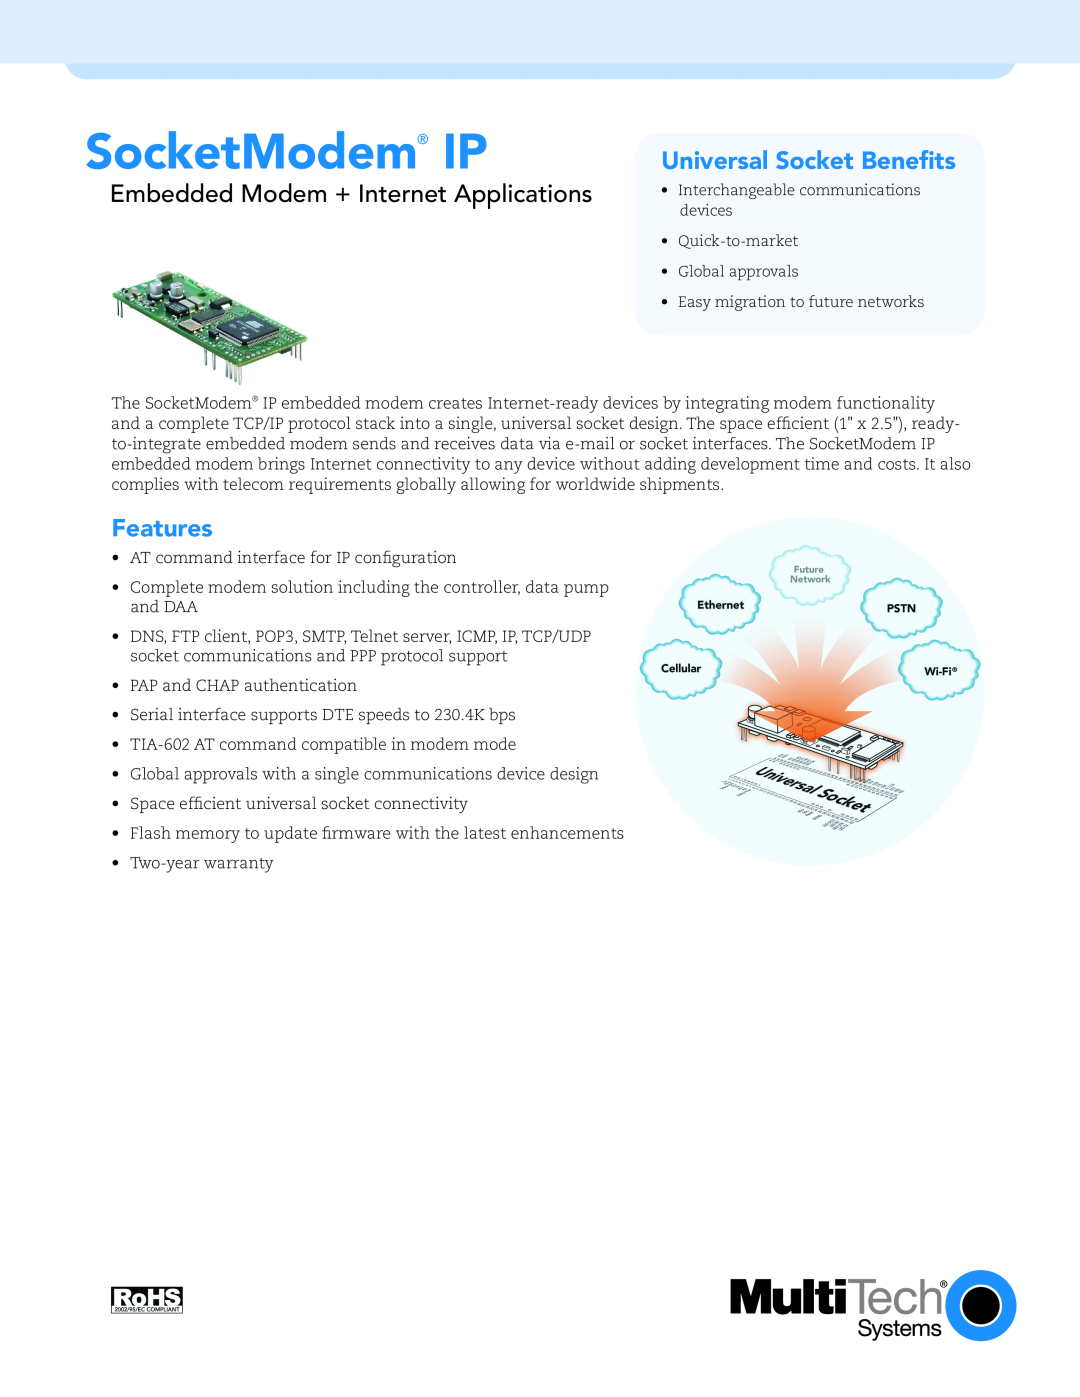 Multi-Tech Systems FCCCFR47 warranty SocketModem IP, Embedded Modem + Internet Applications, Features 